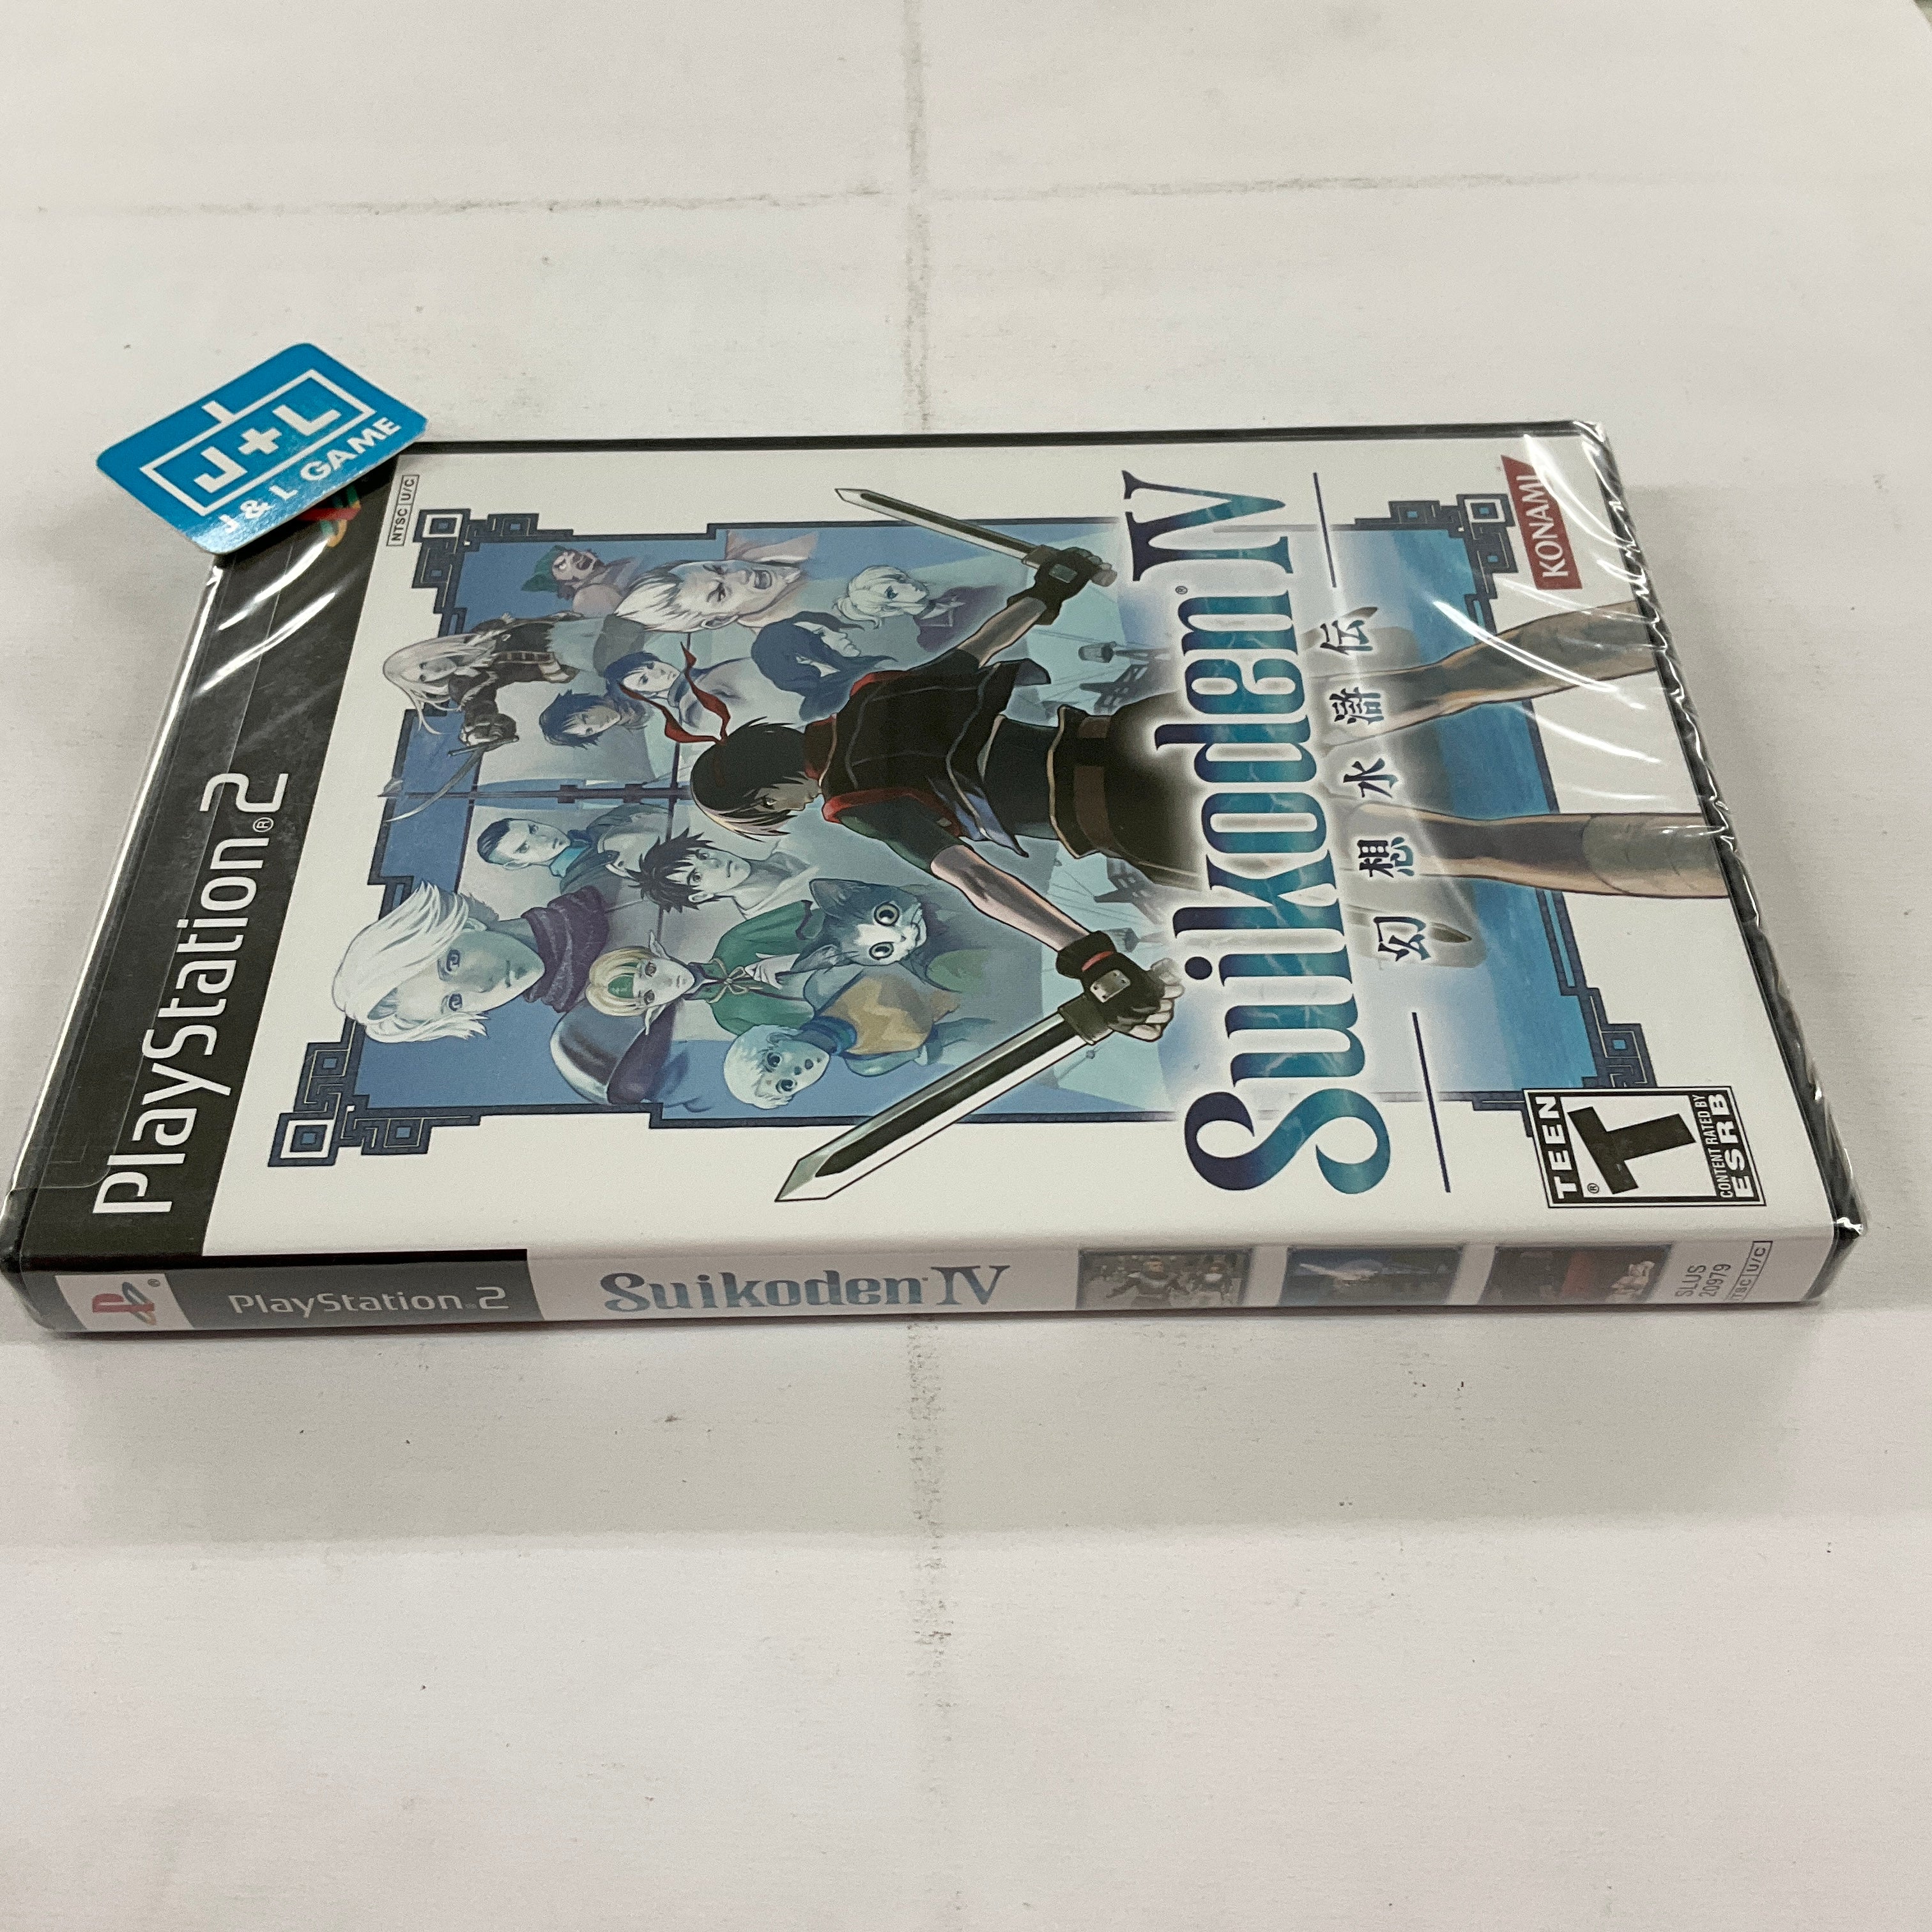 Suikoden IV - (PS2) PlayStation 2 Video Games Konami   